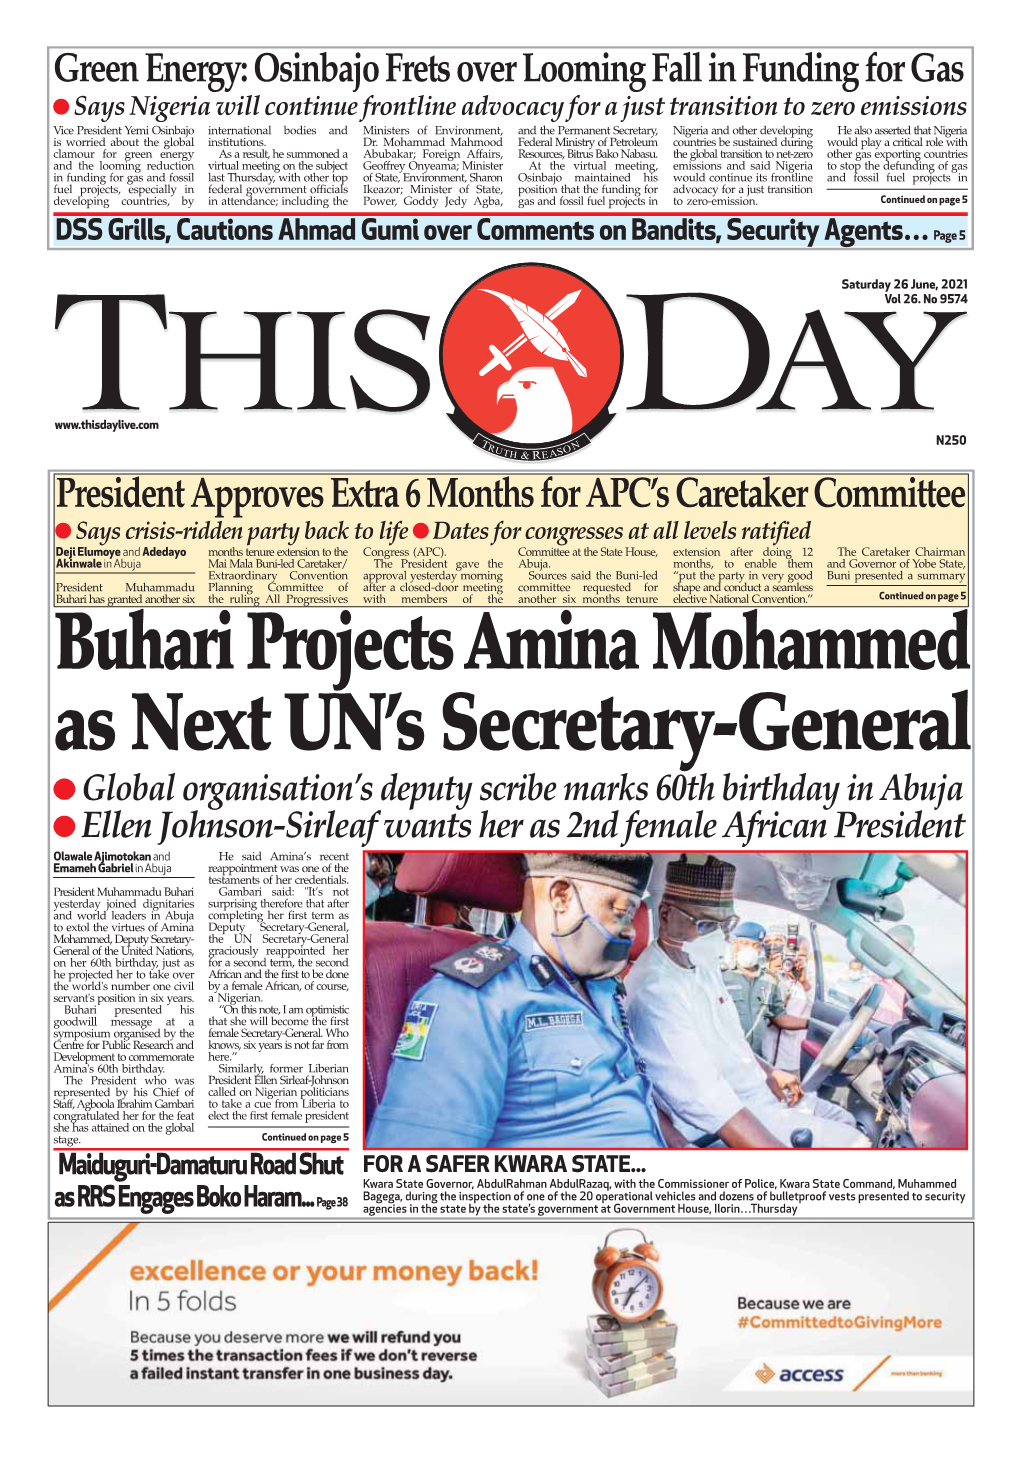 Buhari Projects Amina Mohammed As Next UN's Secretary-General